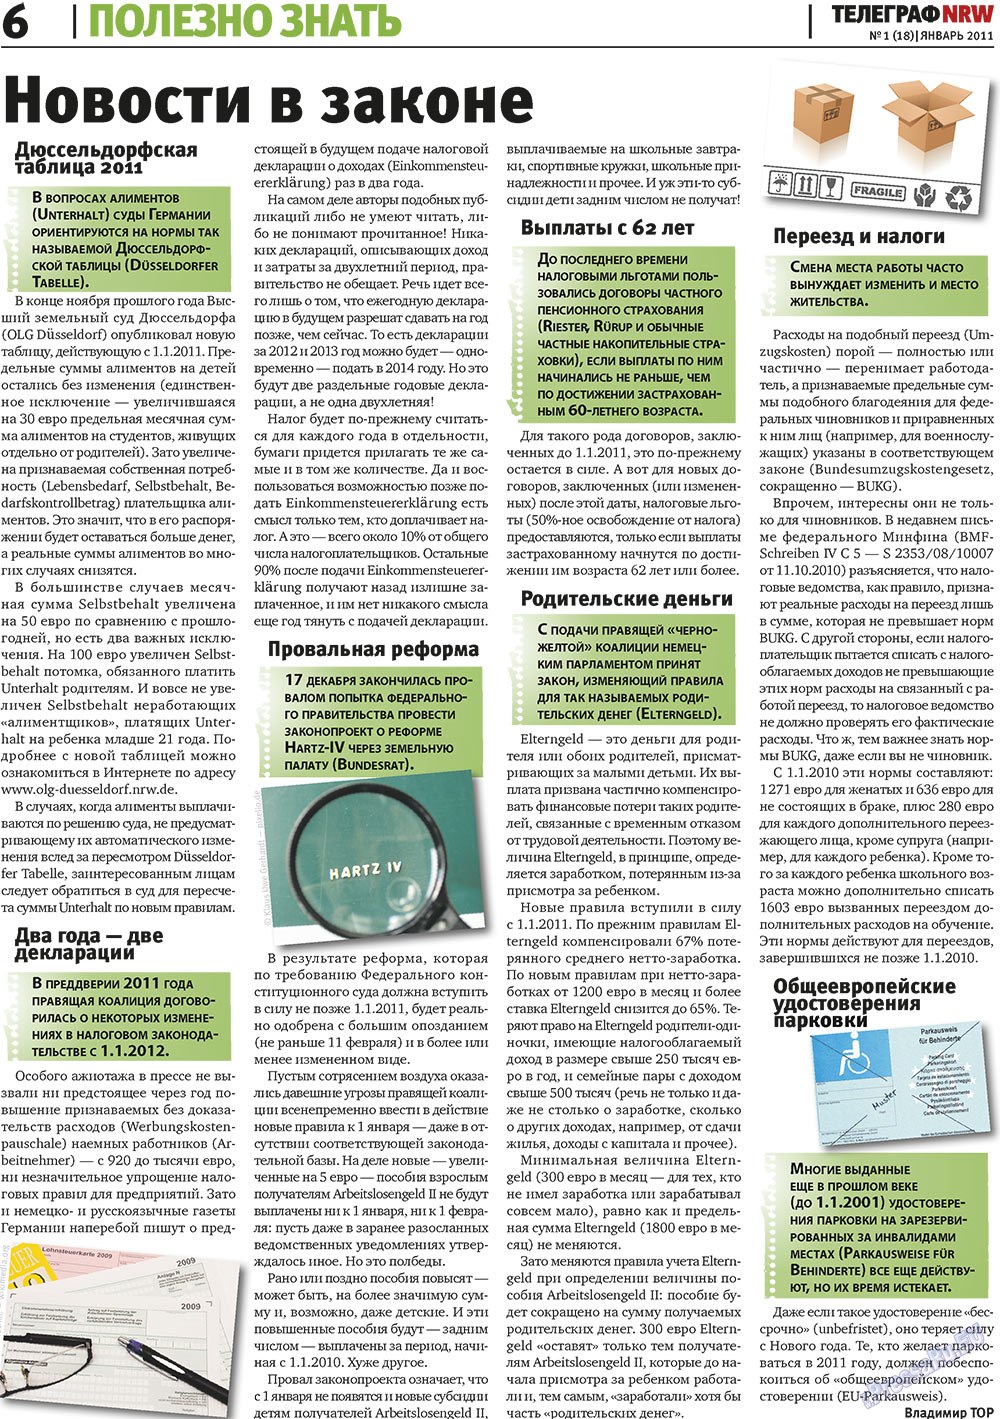 Телеграф NRW, газета. 2011 №1 стр.6